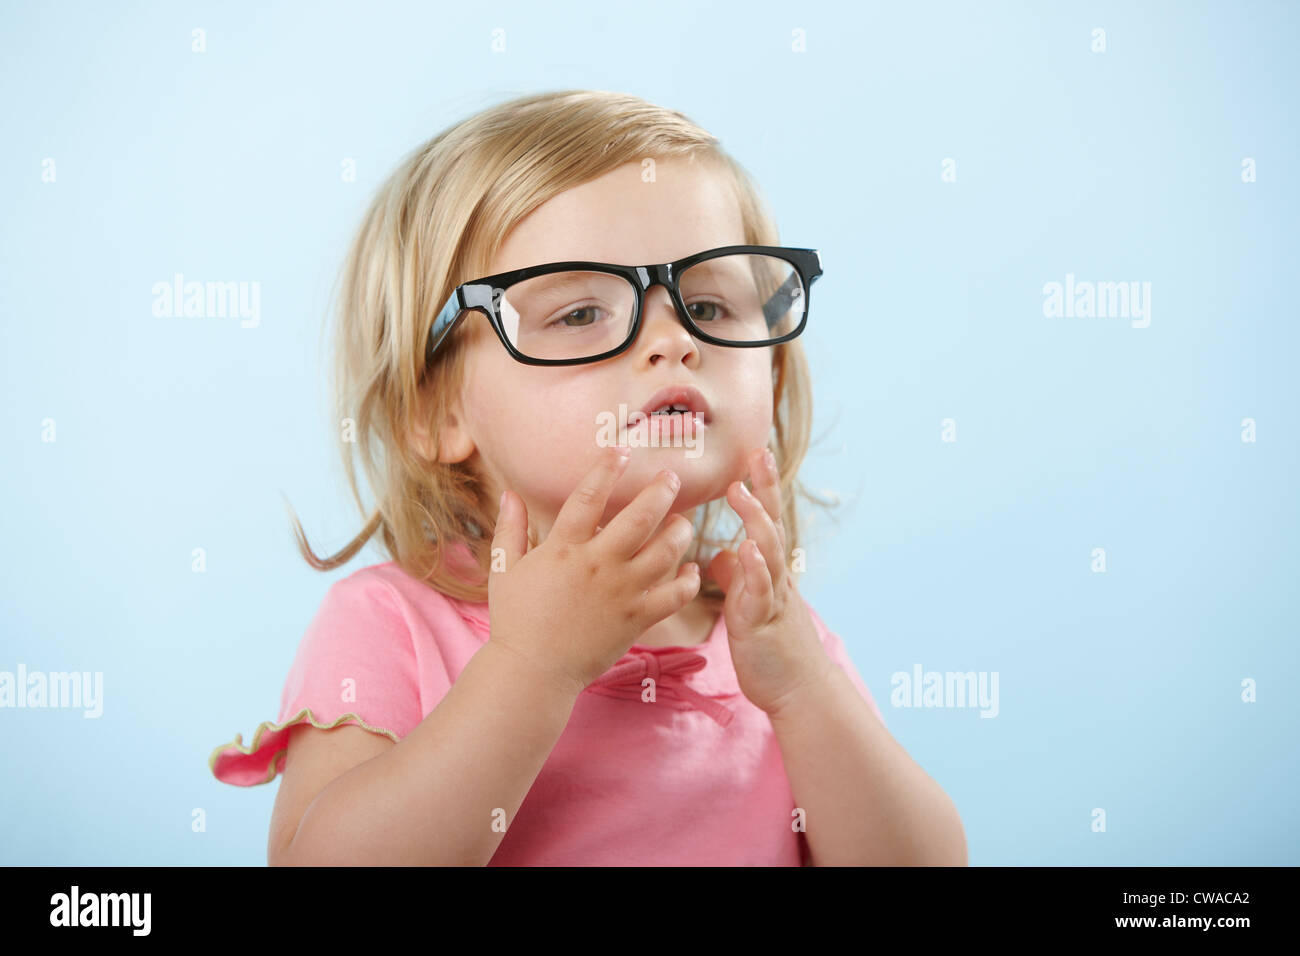 Girl wearing eyeglasses Stock Photo